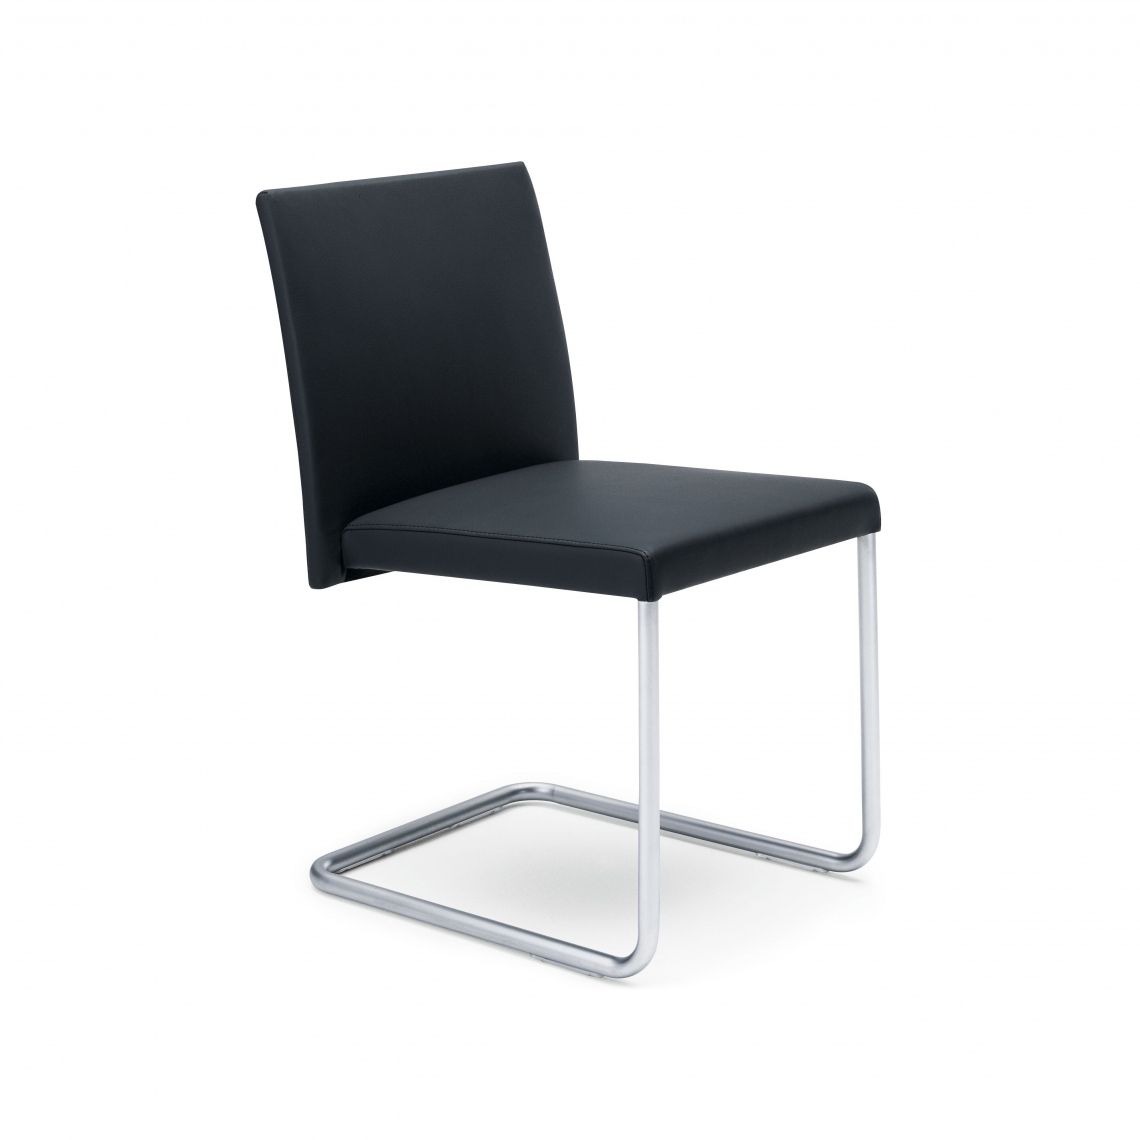 Jason Lite Cantilever Chair.休闲椅细节图1